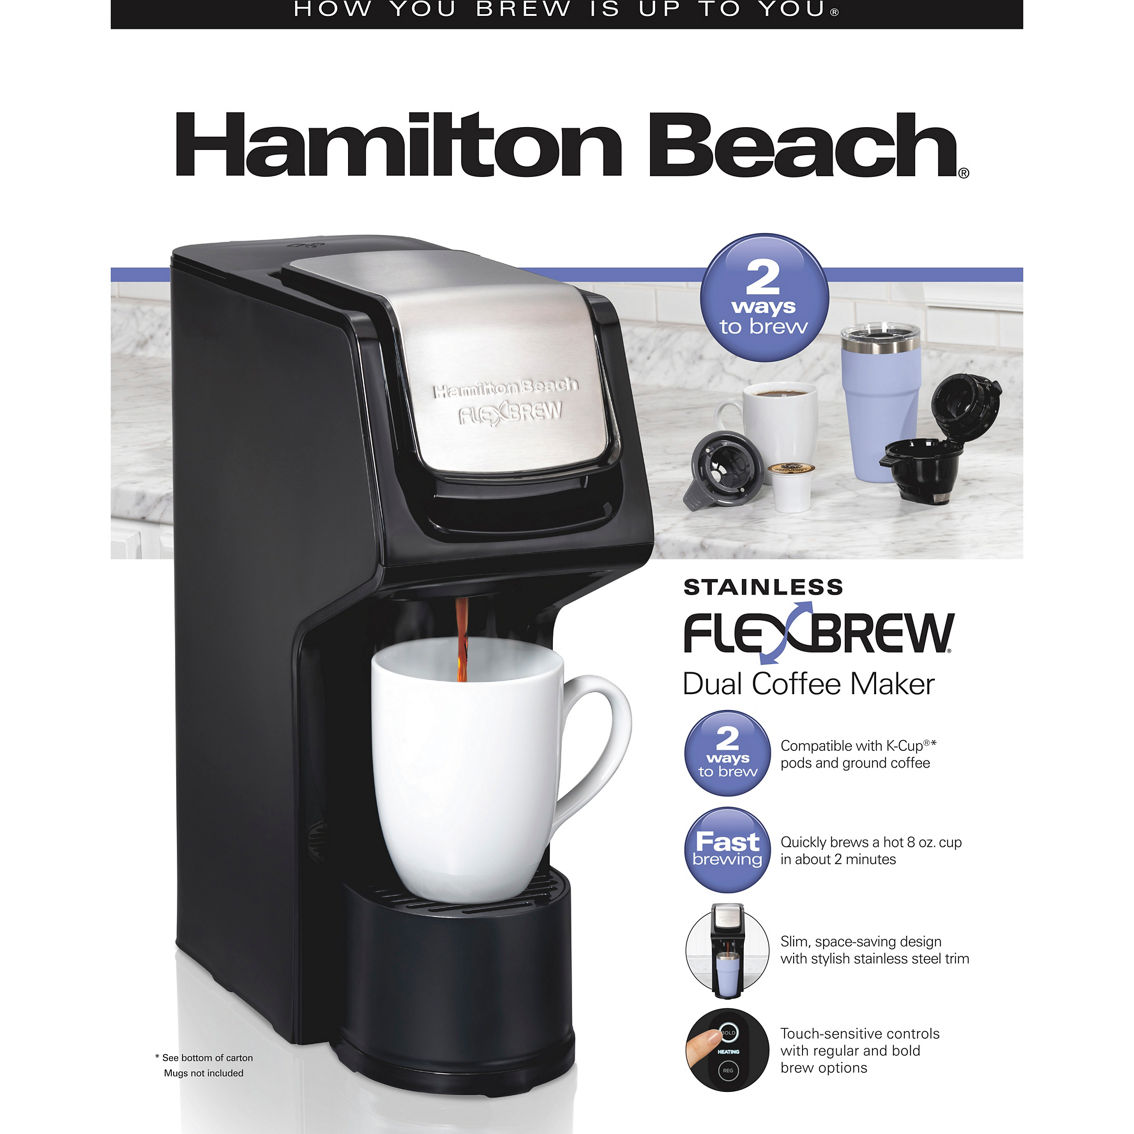 Hamilton Beach FlexBrew Dual Coffee Maker - Image 3 of 3